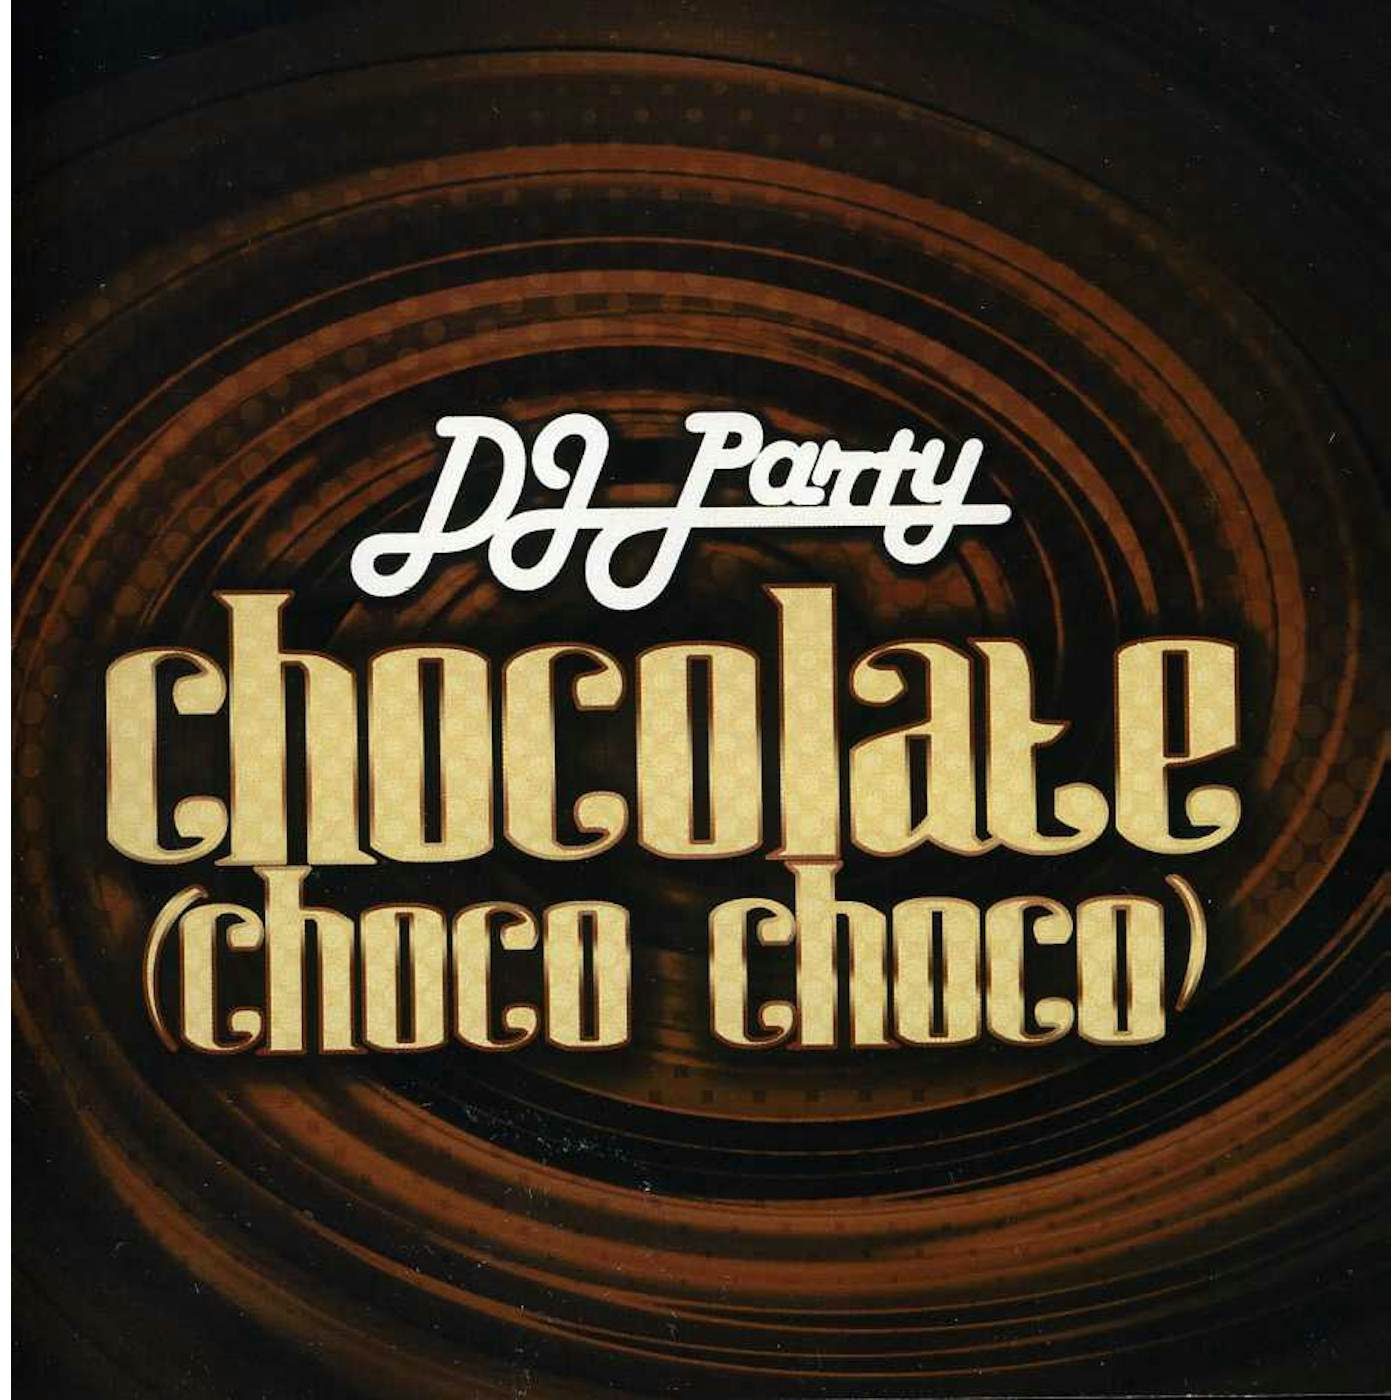 DJ Party CHOCOLATE (CHOCO CHOCO) CD